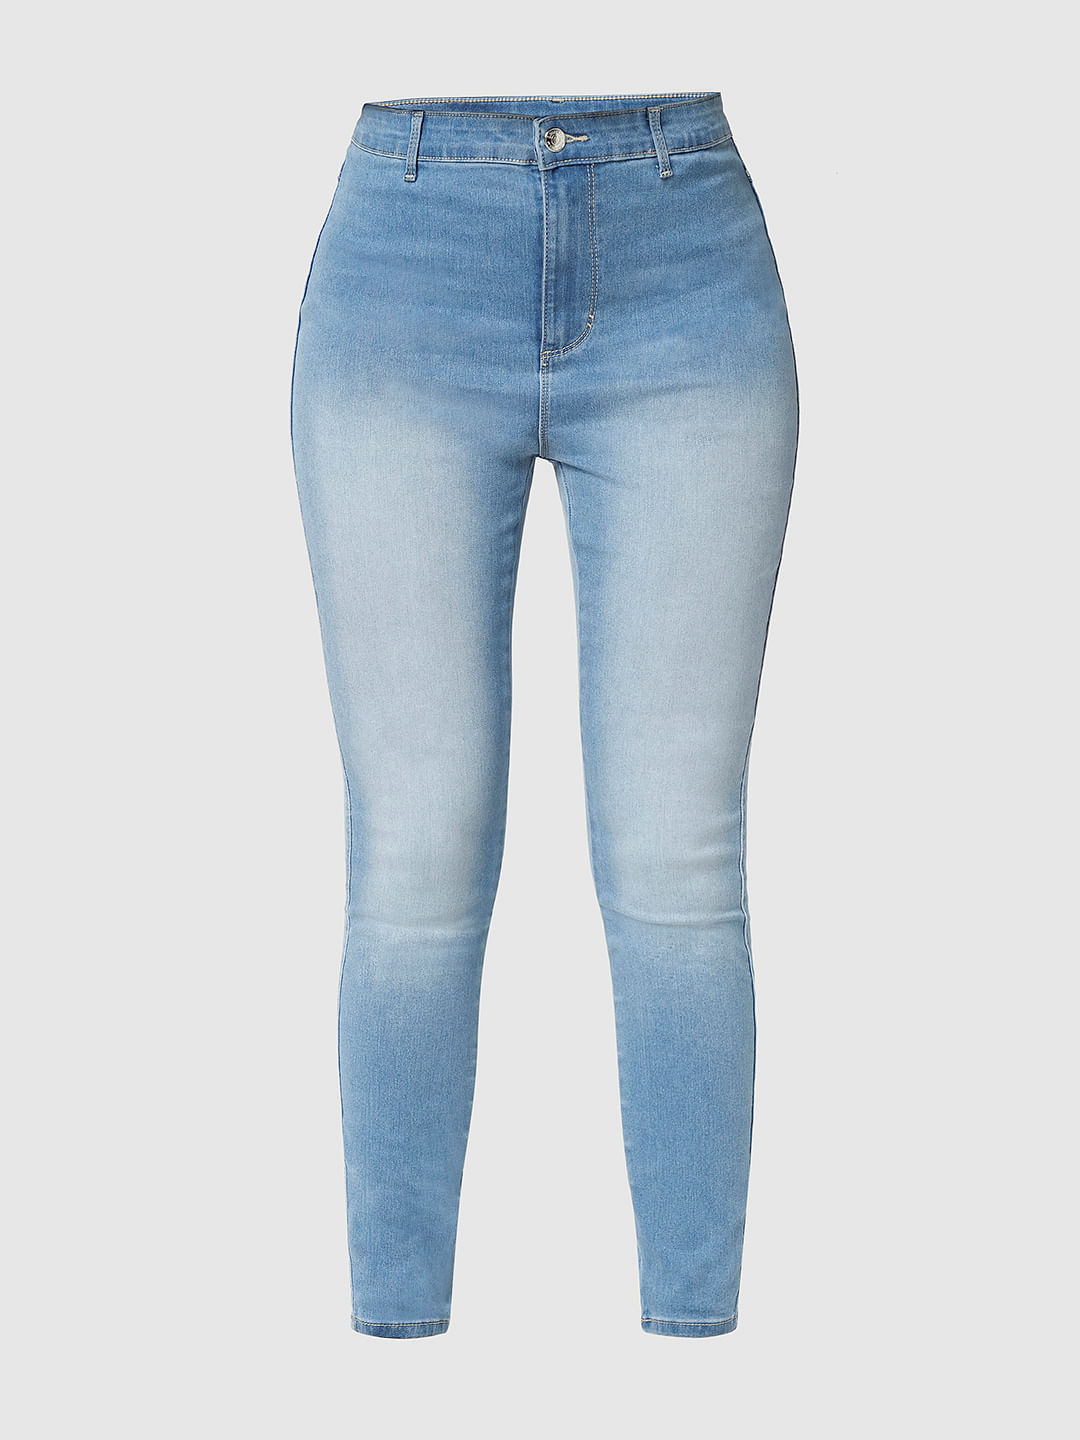 Judy women's jeans super skinny fit high waist ankle length light blue –  CROSS JEANS